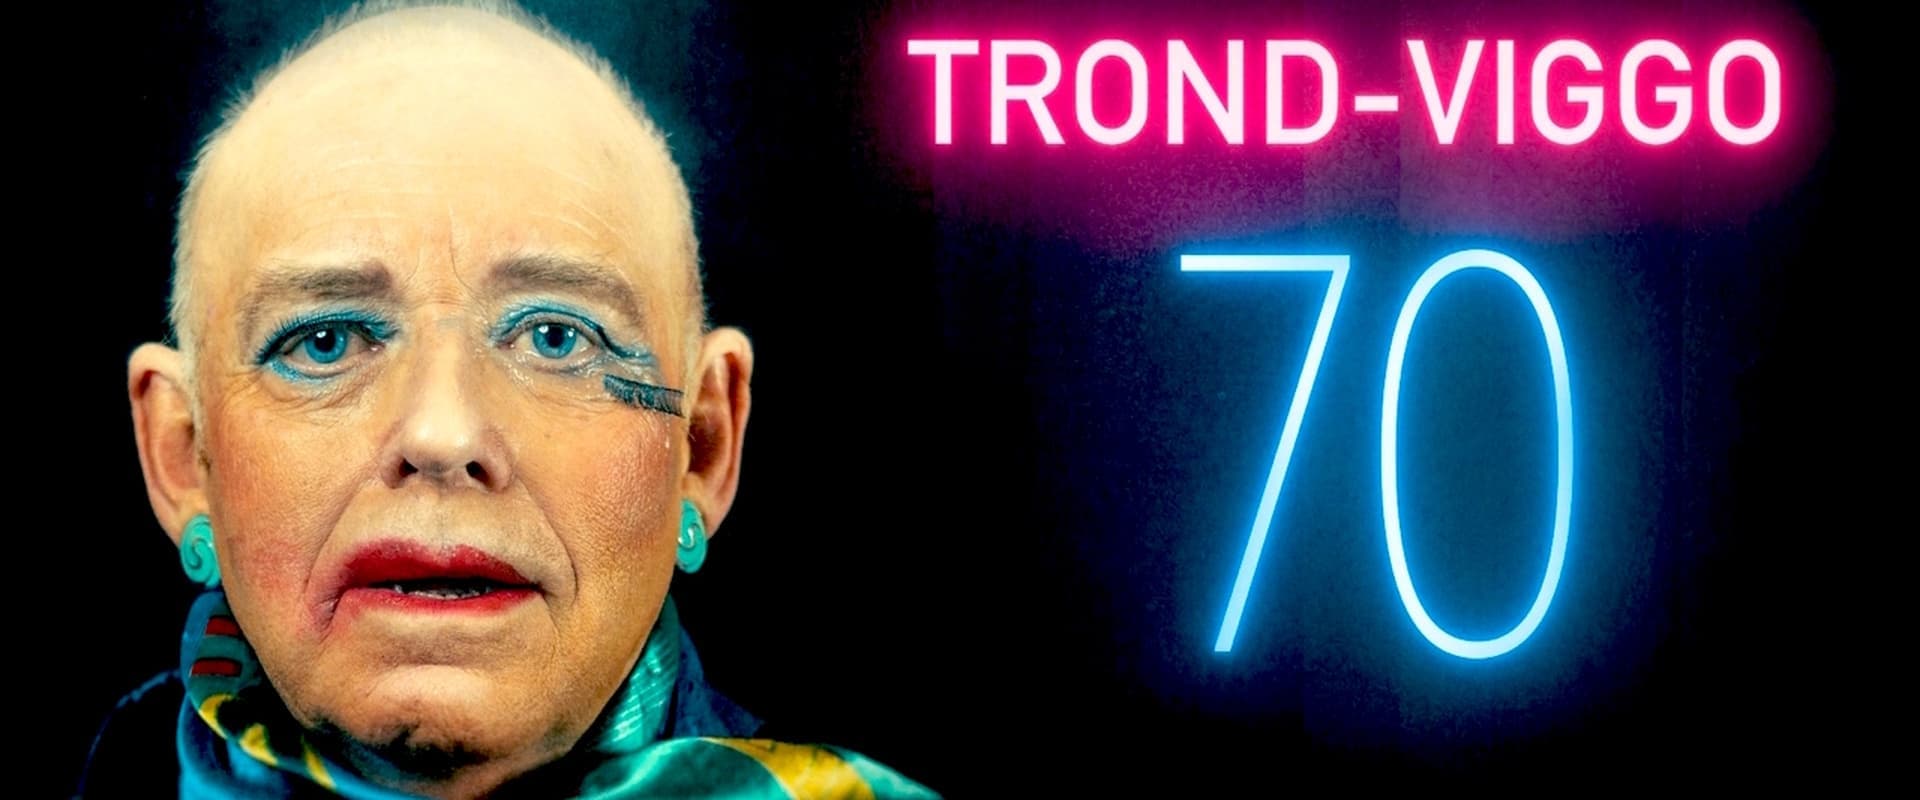 Trond-Viggo 70 Years